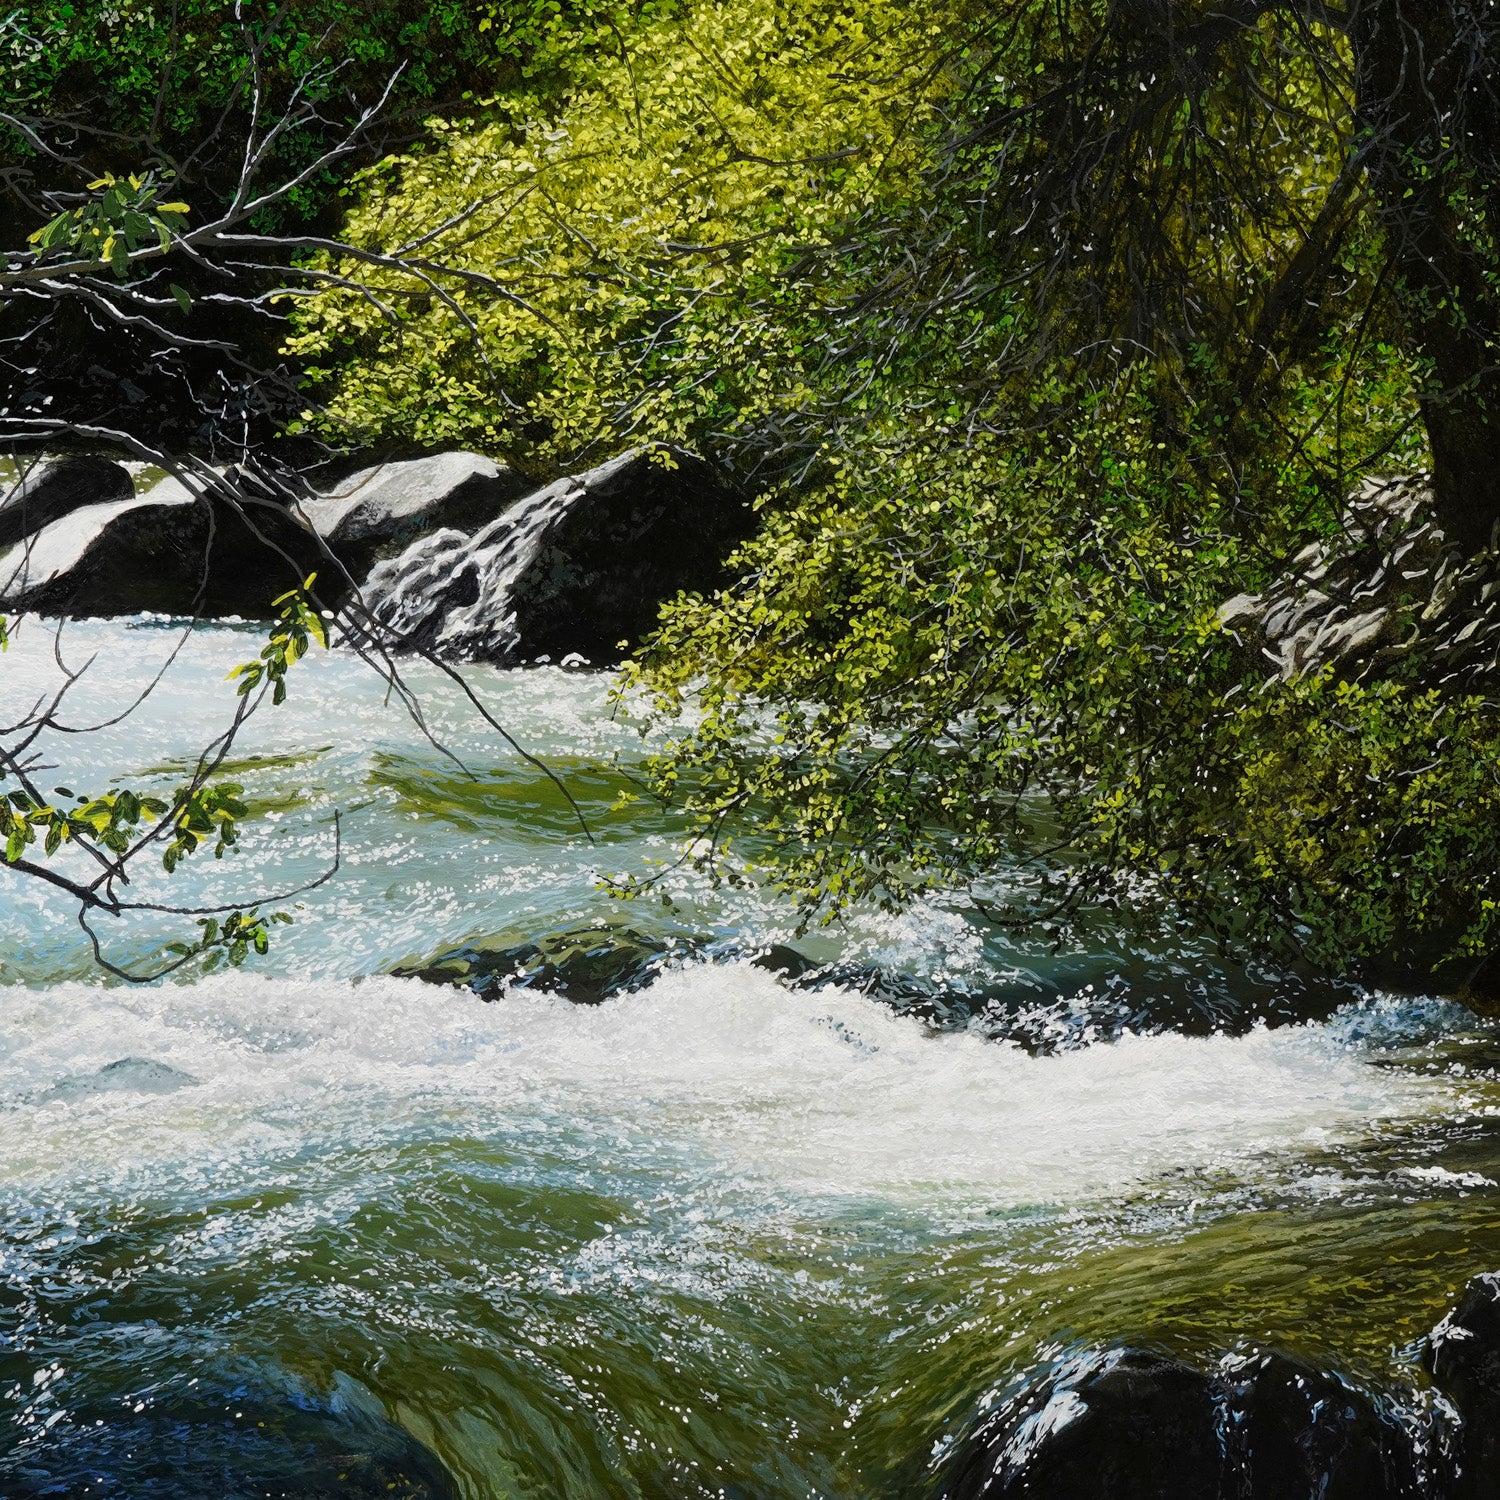 "Rushing River"  Original Oil Painting